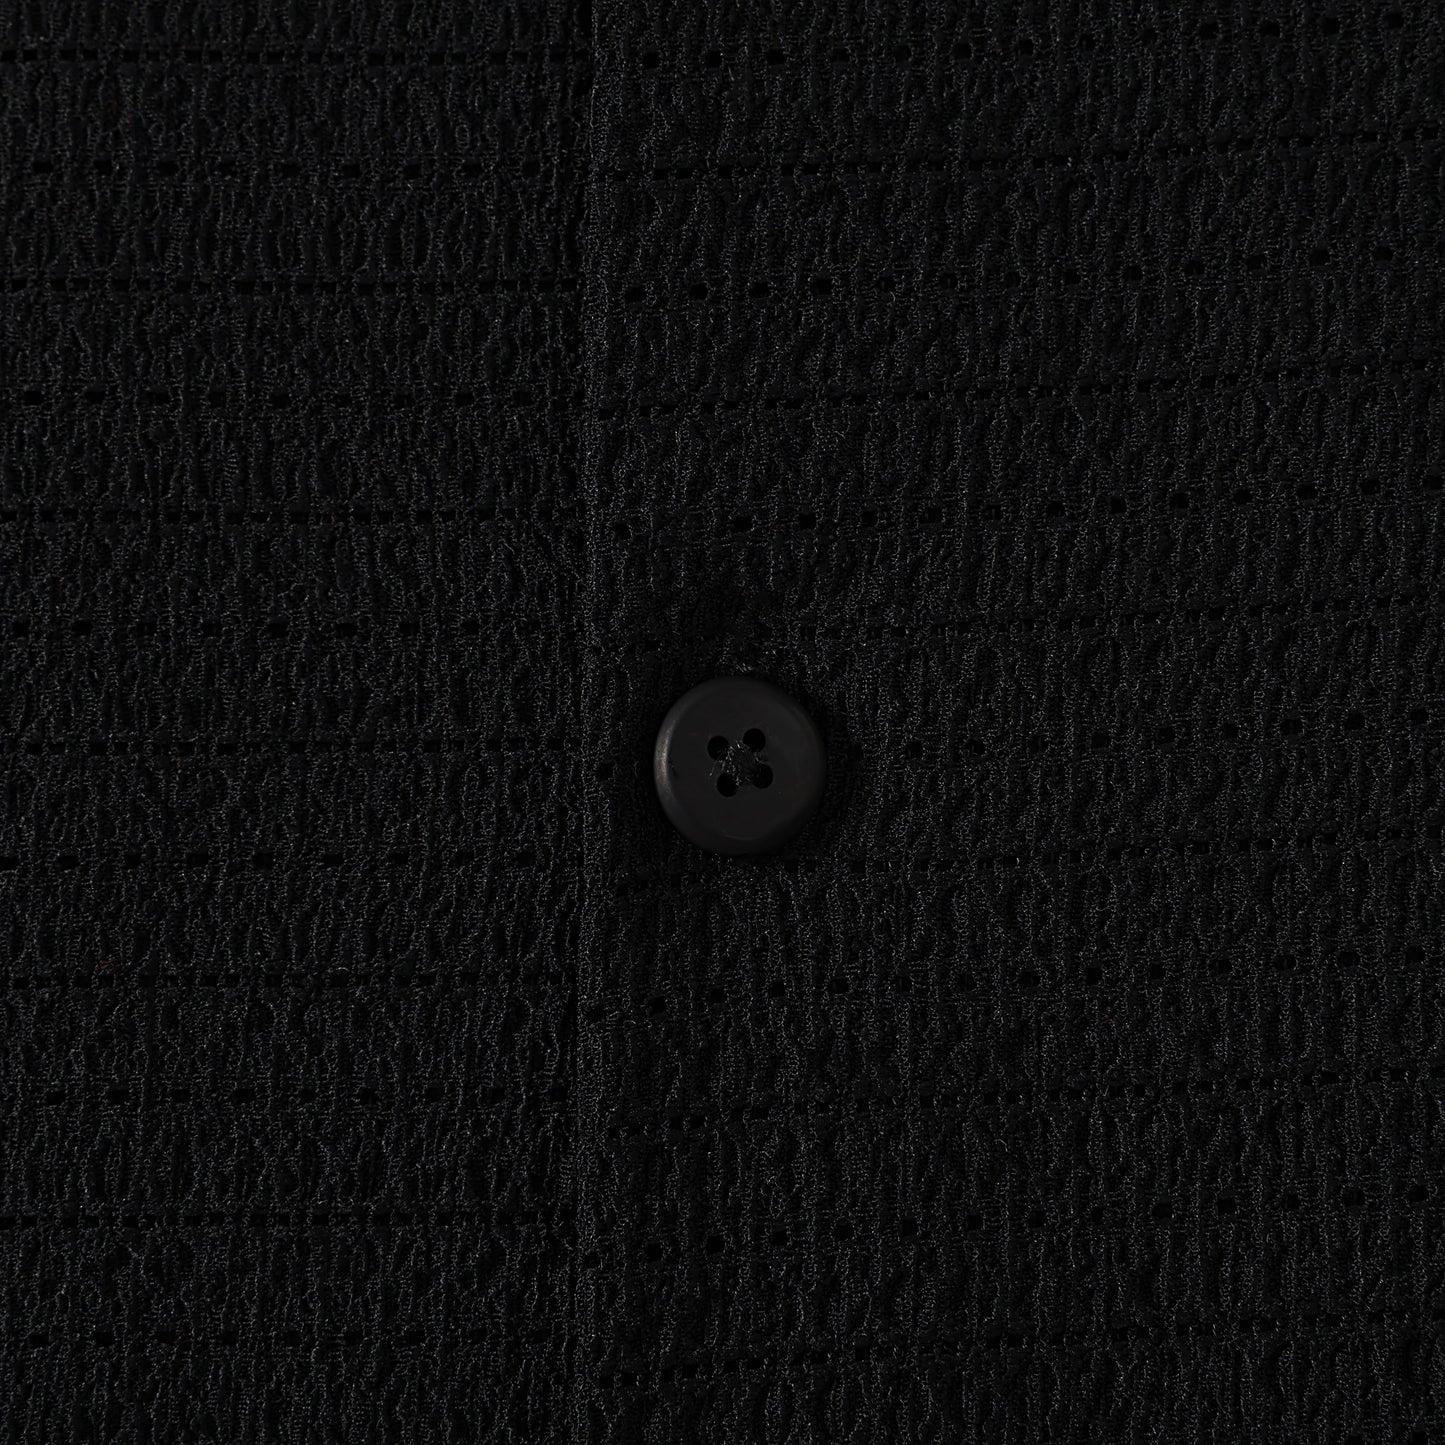 Black Lace Textured Camp Collar Short Sleeve Shirt